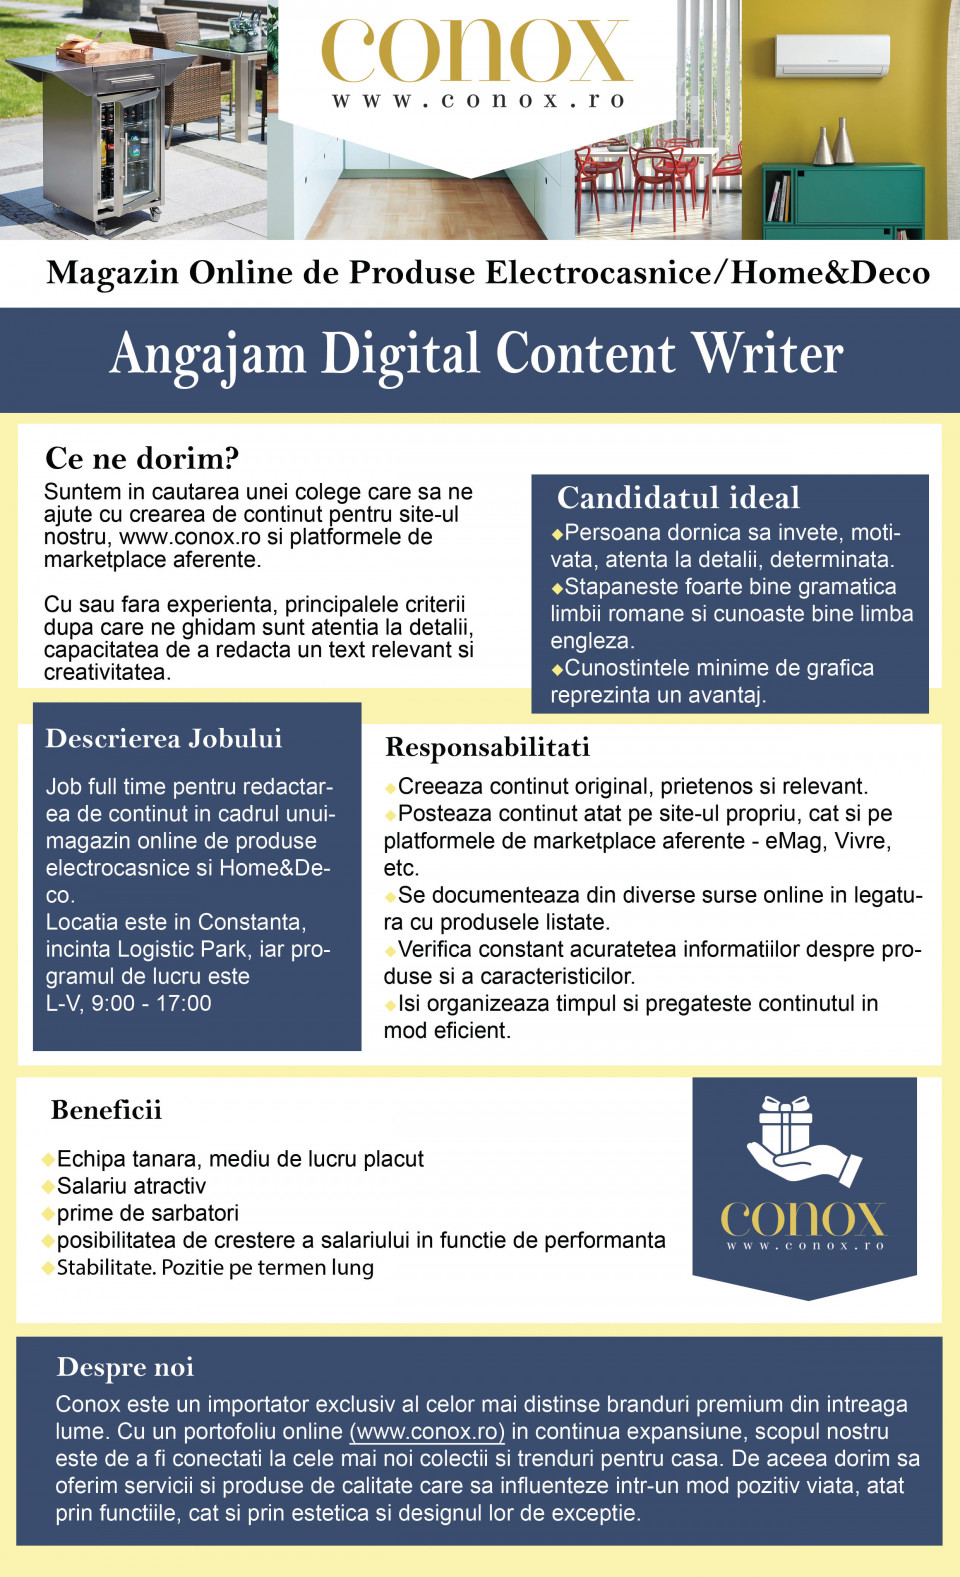 Digital marketing/ Content writing